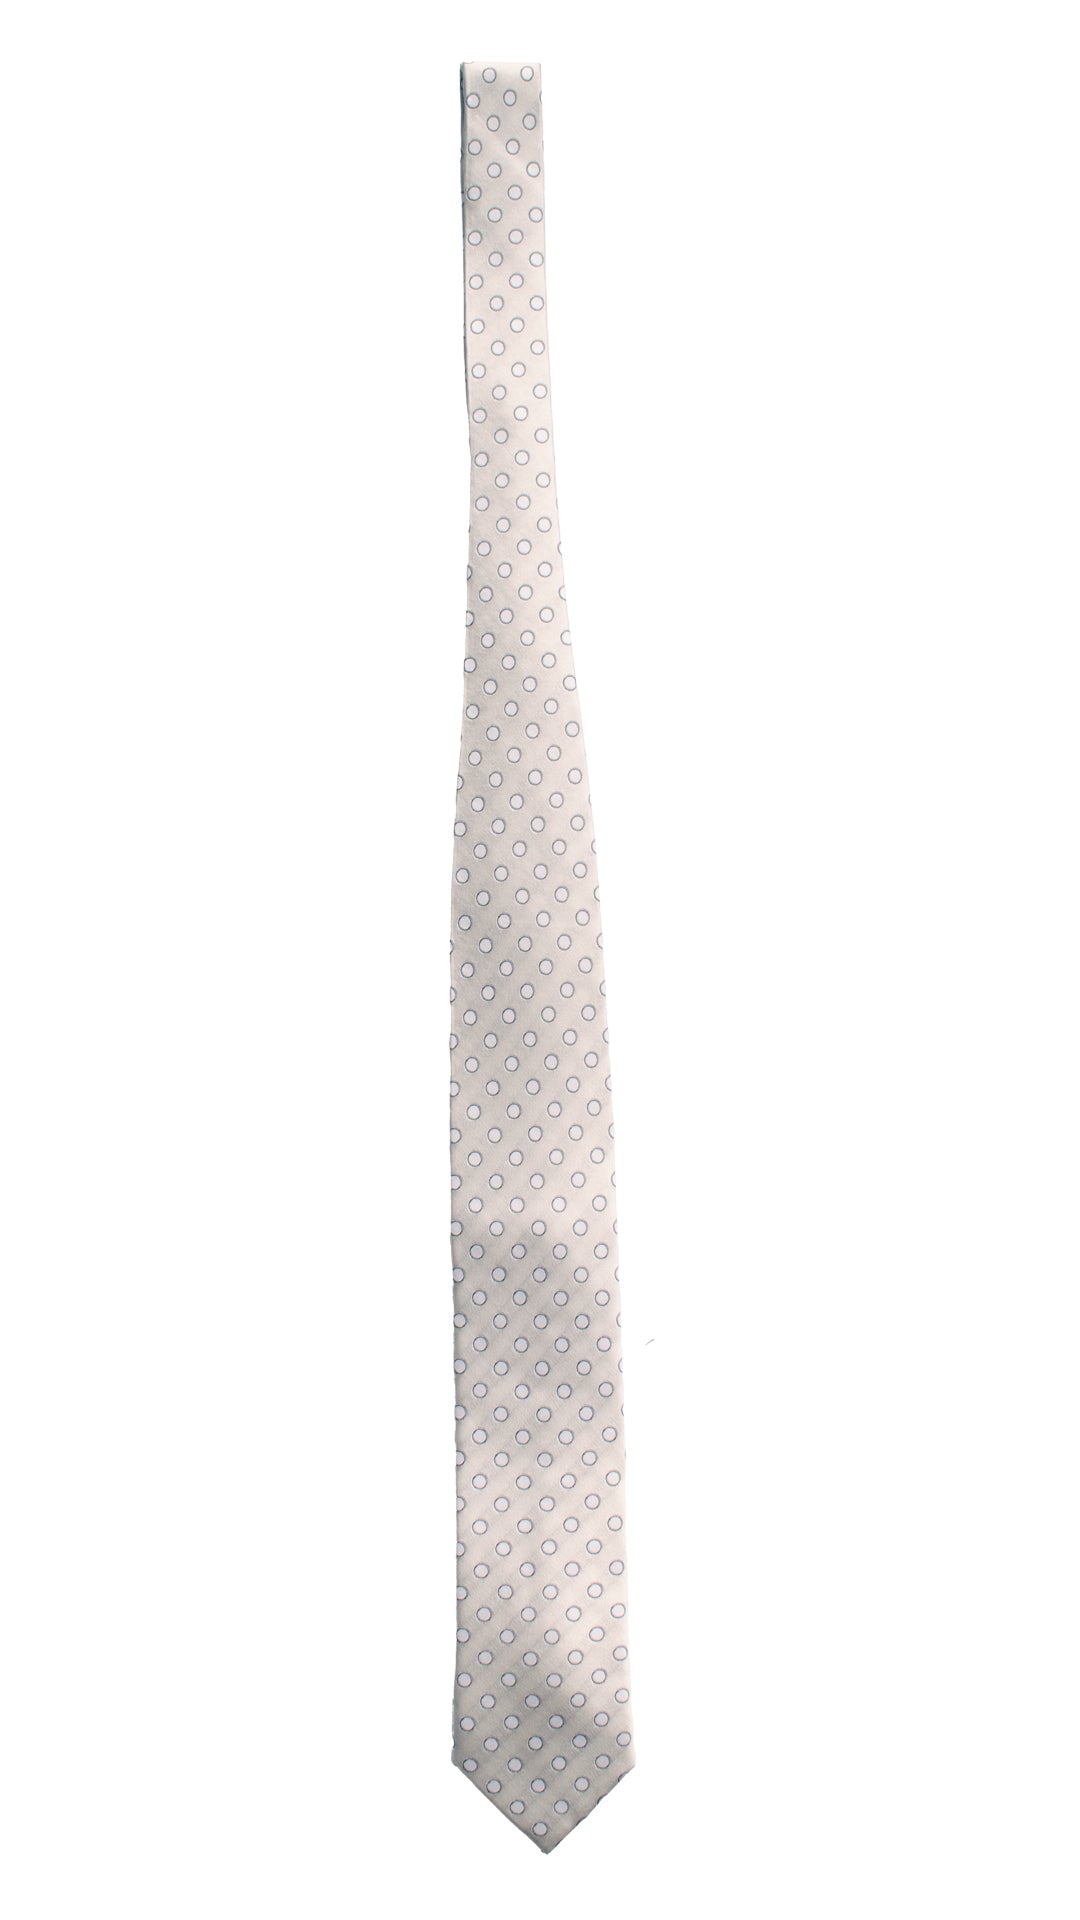 Cravatta da Cerimonia di Seta Bianca Avorio a Pois Grigio Bianco CY2559 Intera